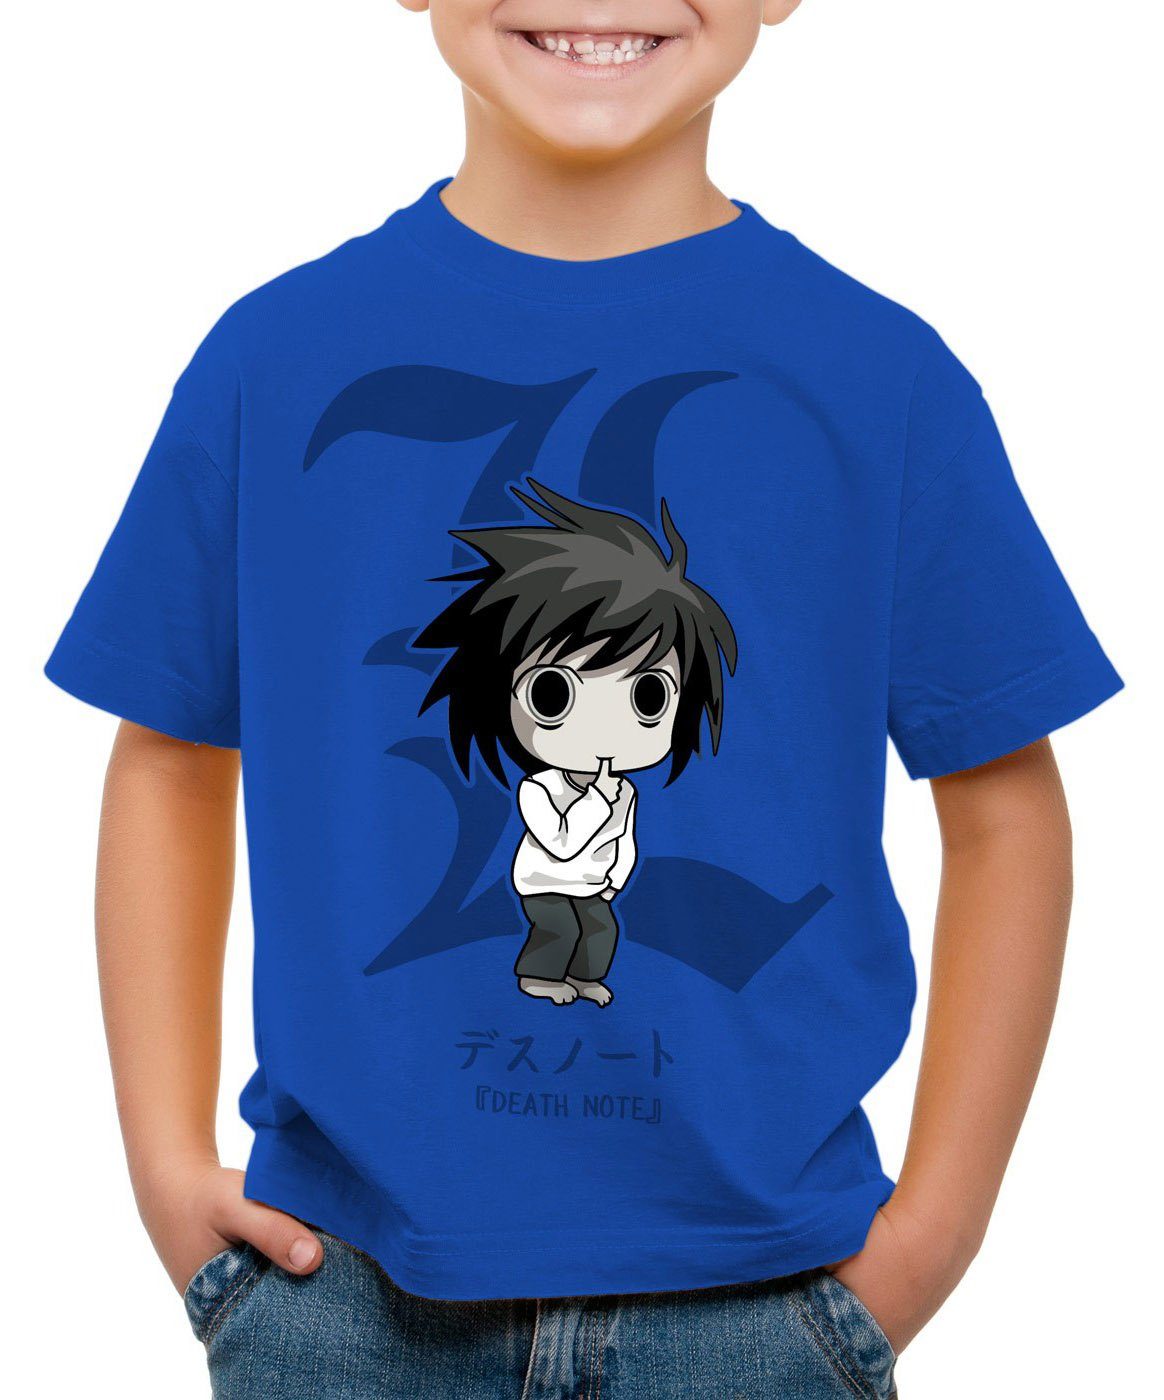 style3 Print-Shirt Kinder T-Shirt L Death Note Notizbuch Anime Manga Yagami blau